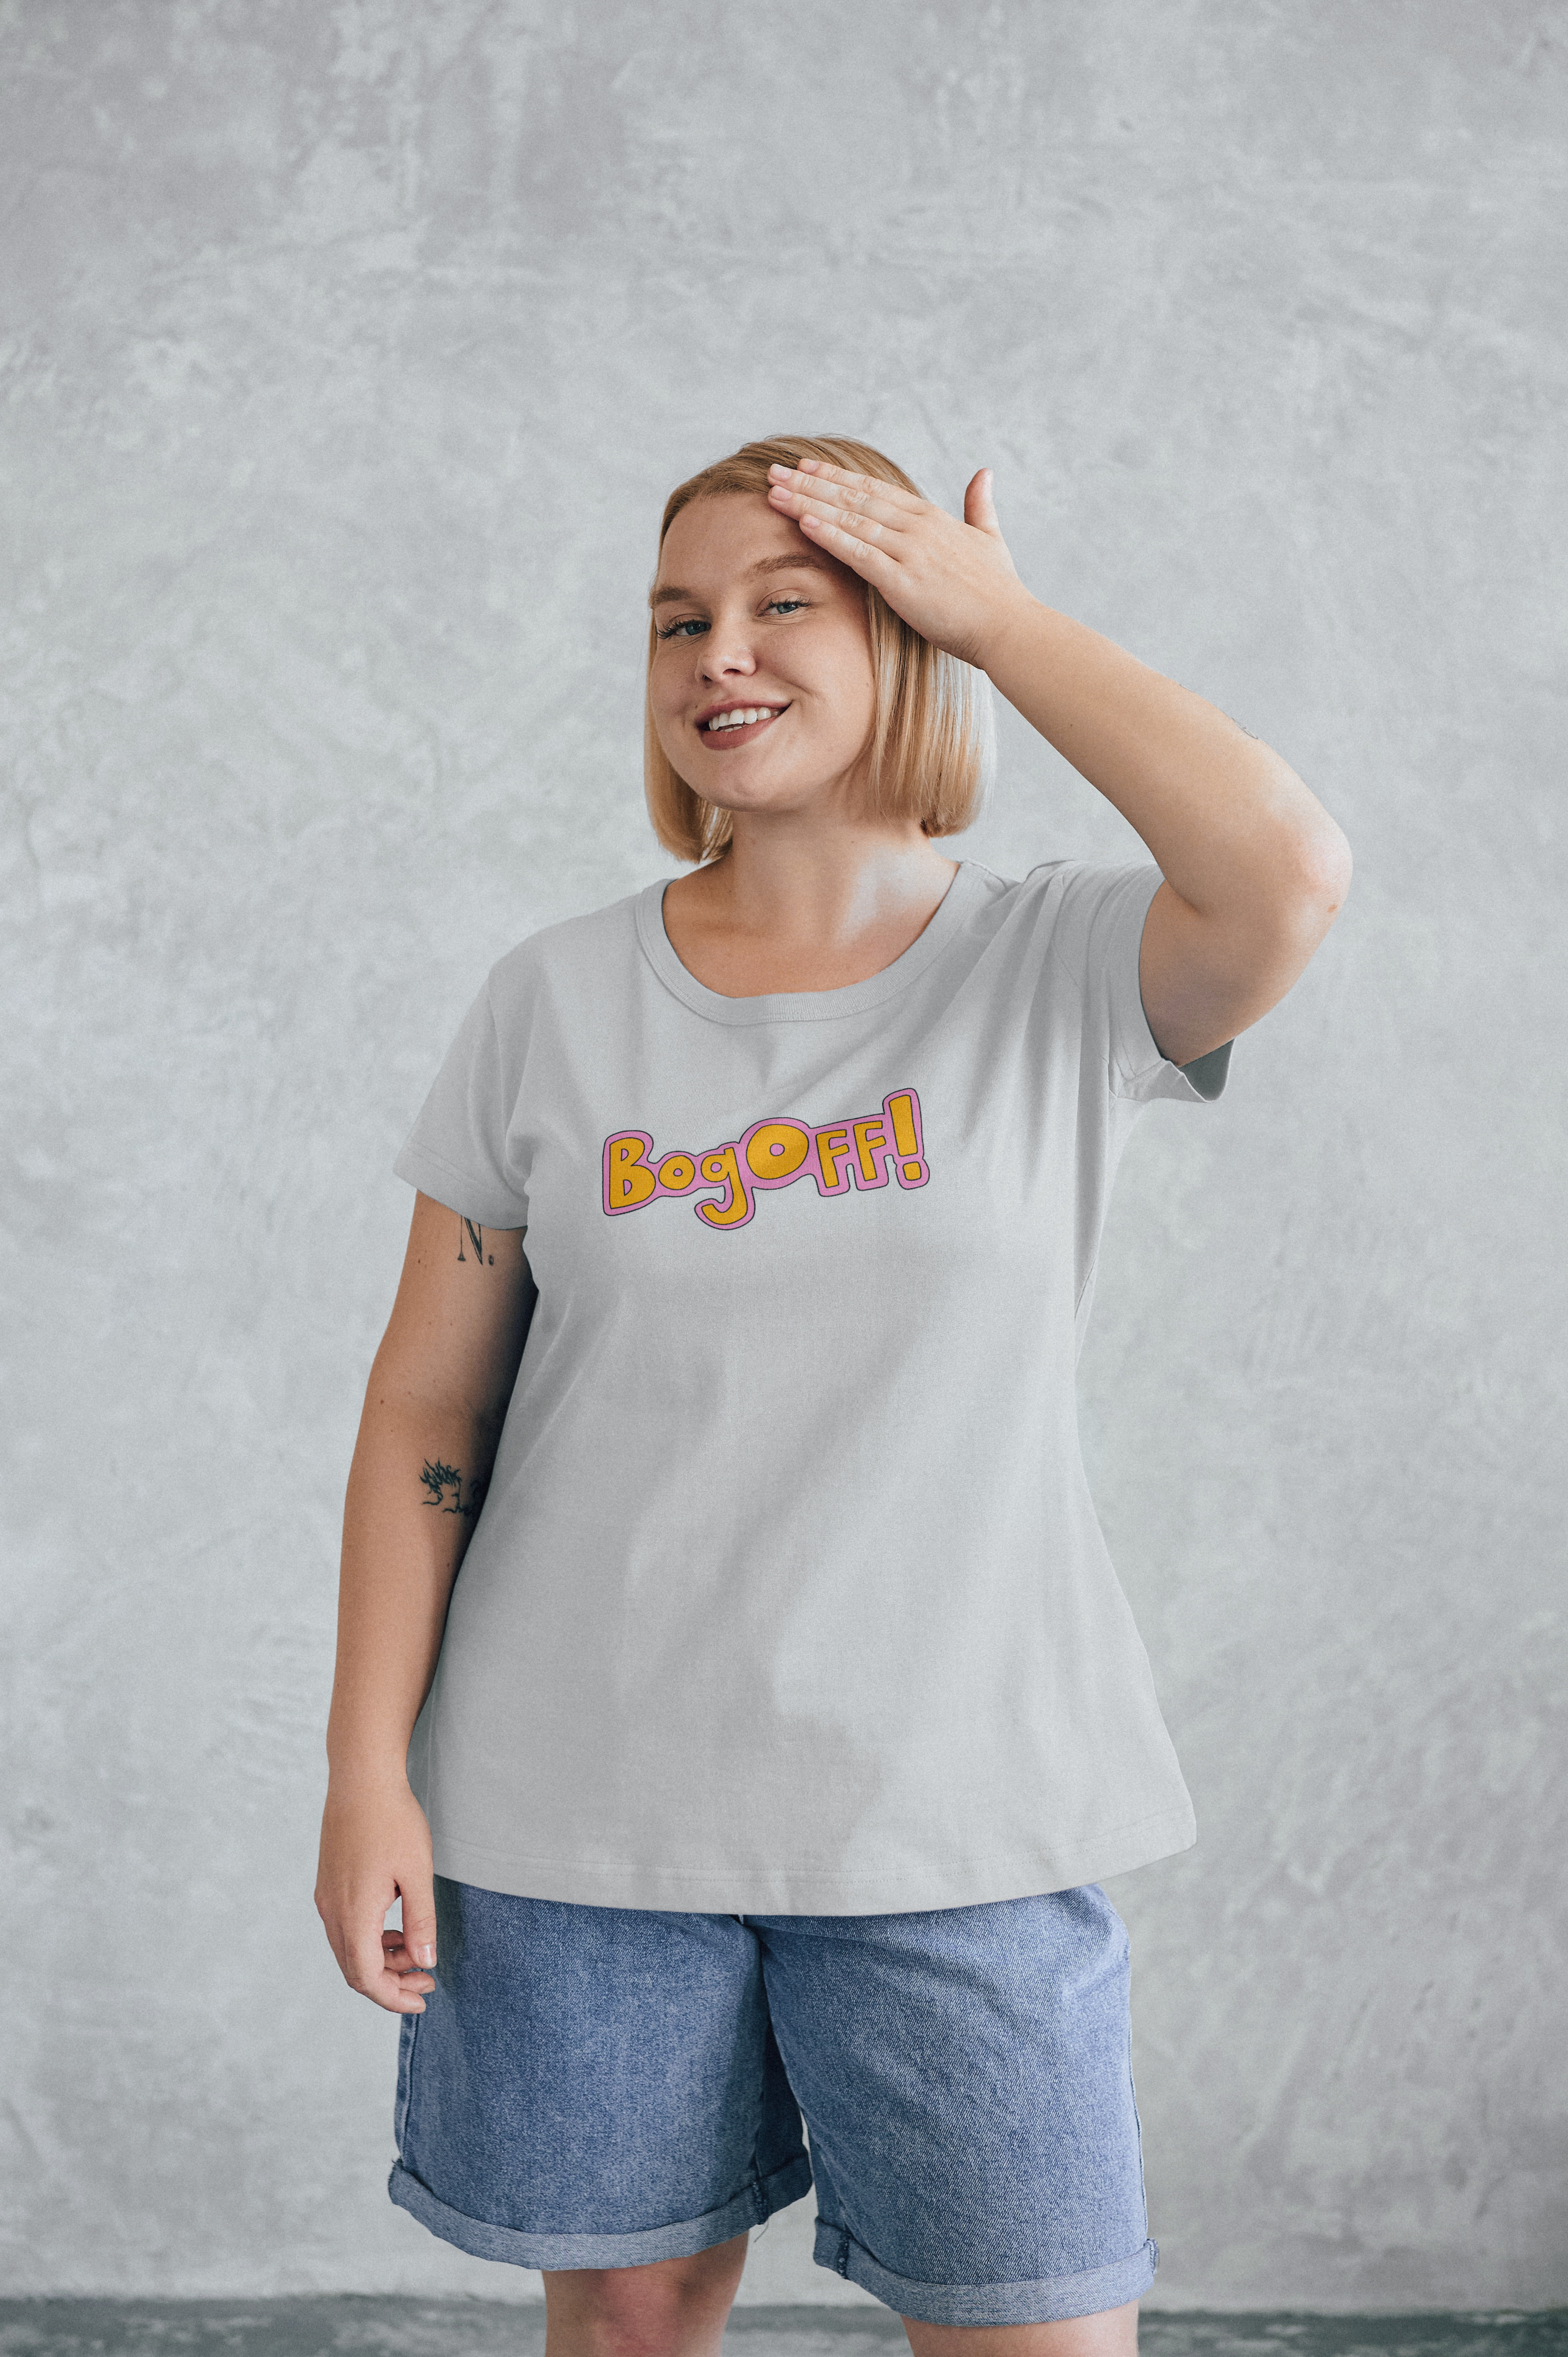 Bog Off T-Shirt - The Story of Tracy Beaker Inspired T-Shirt - Bog Off Tracy Beaker Inspired T-Shirt